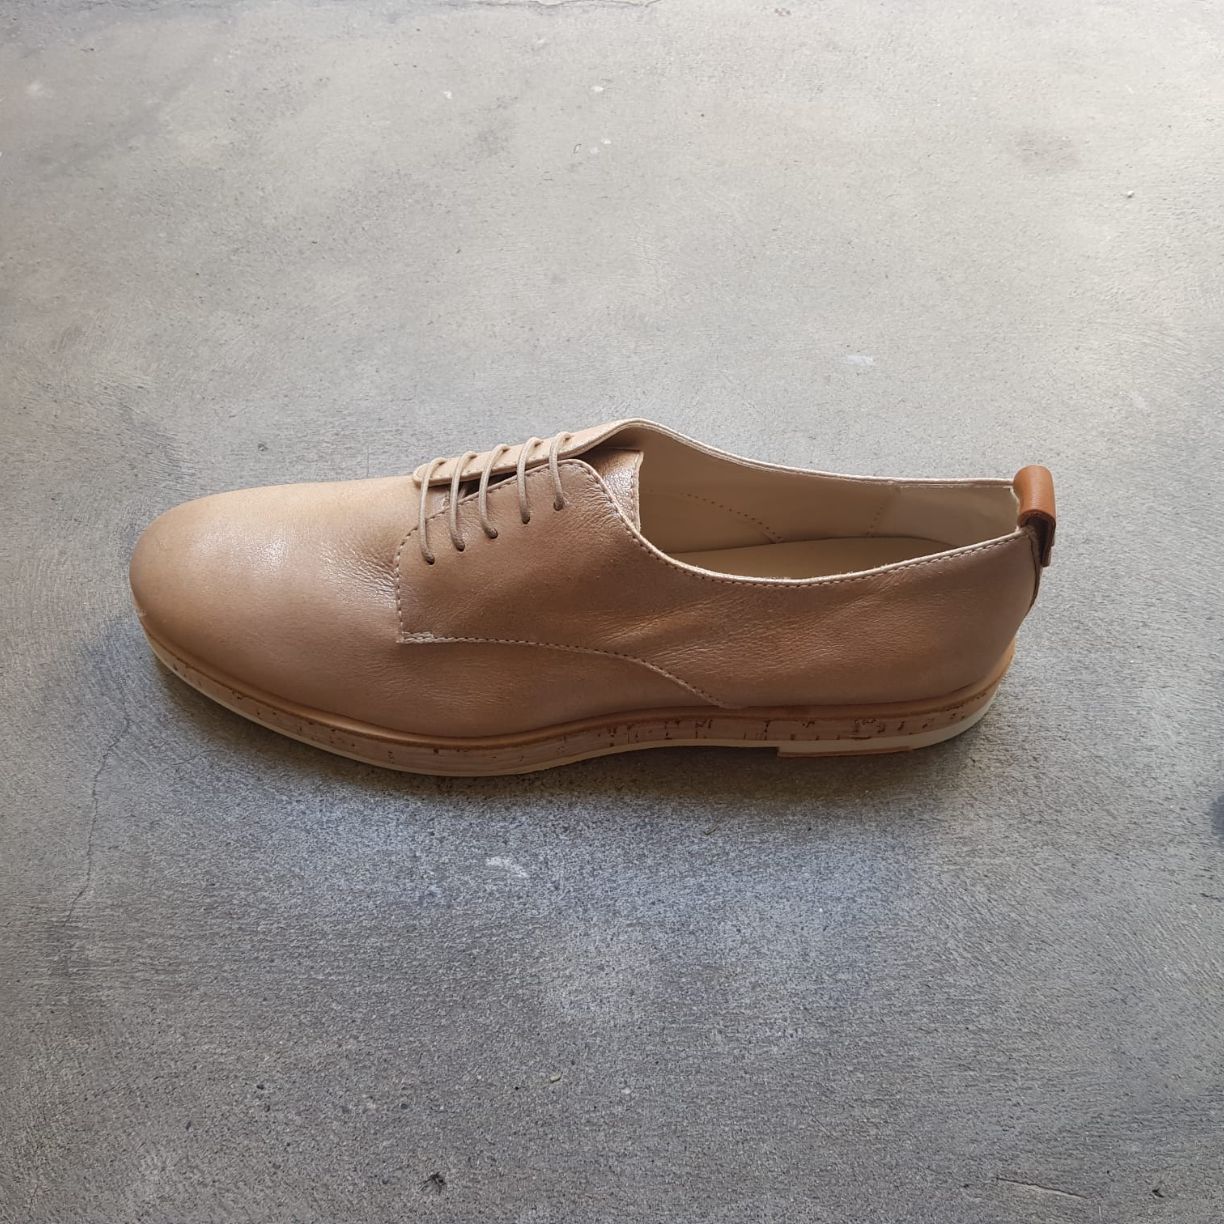 DONNA Les Boutiques - Shoes leather with cork sole